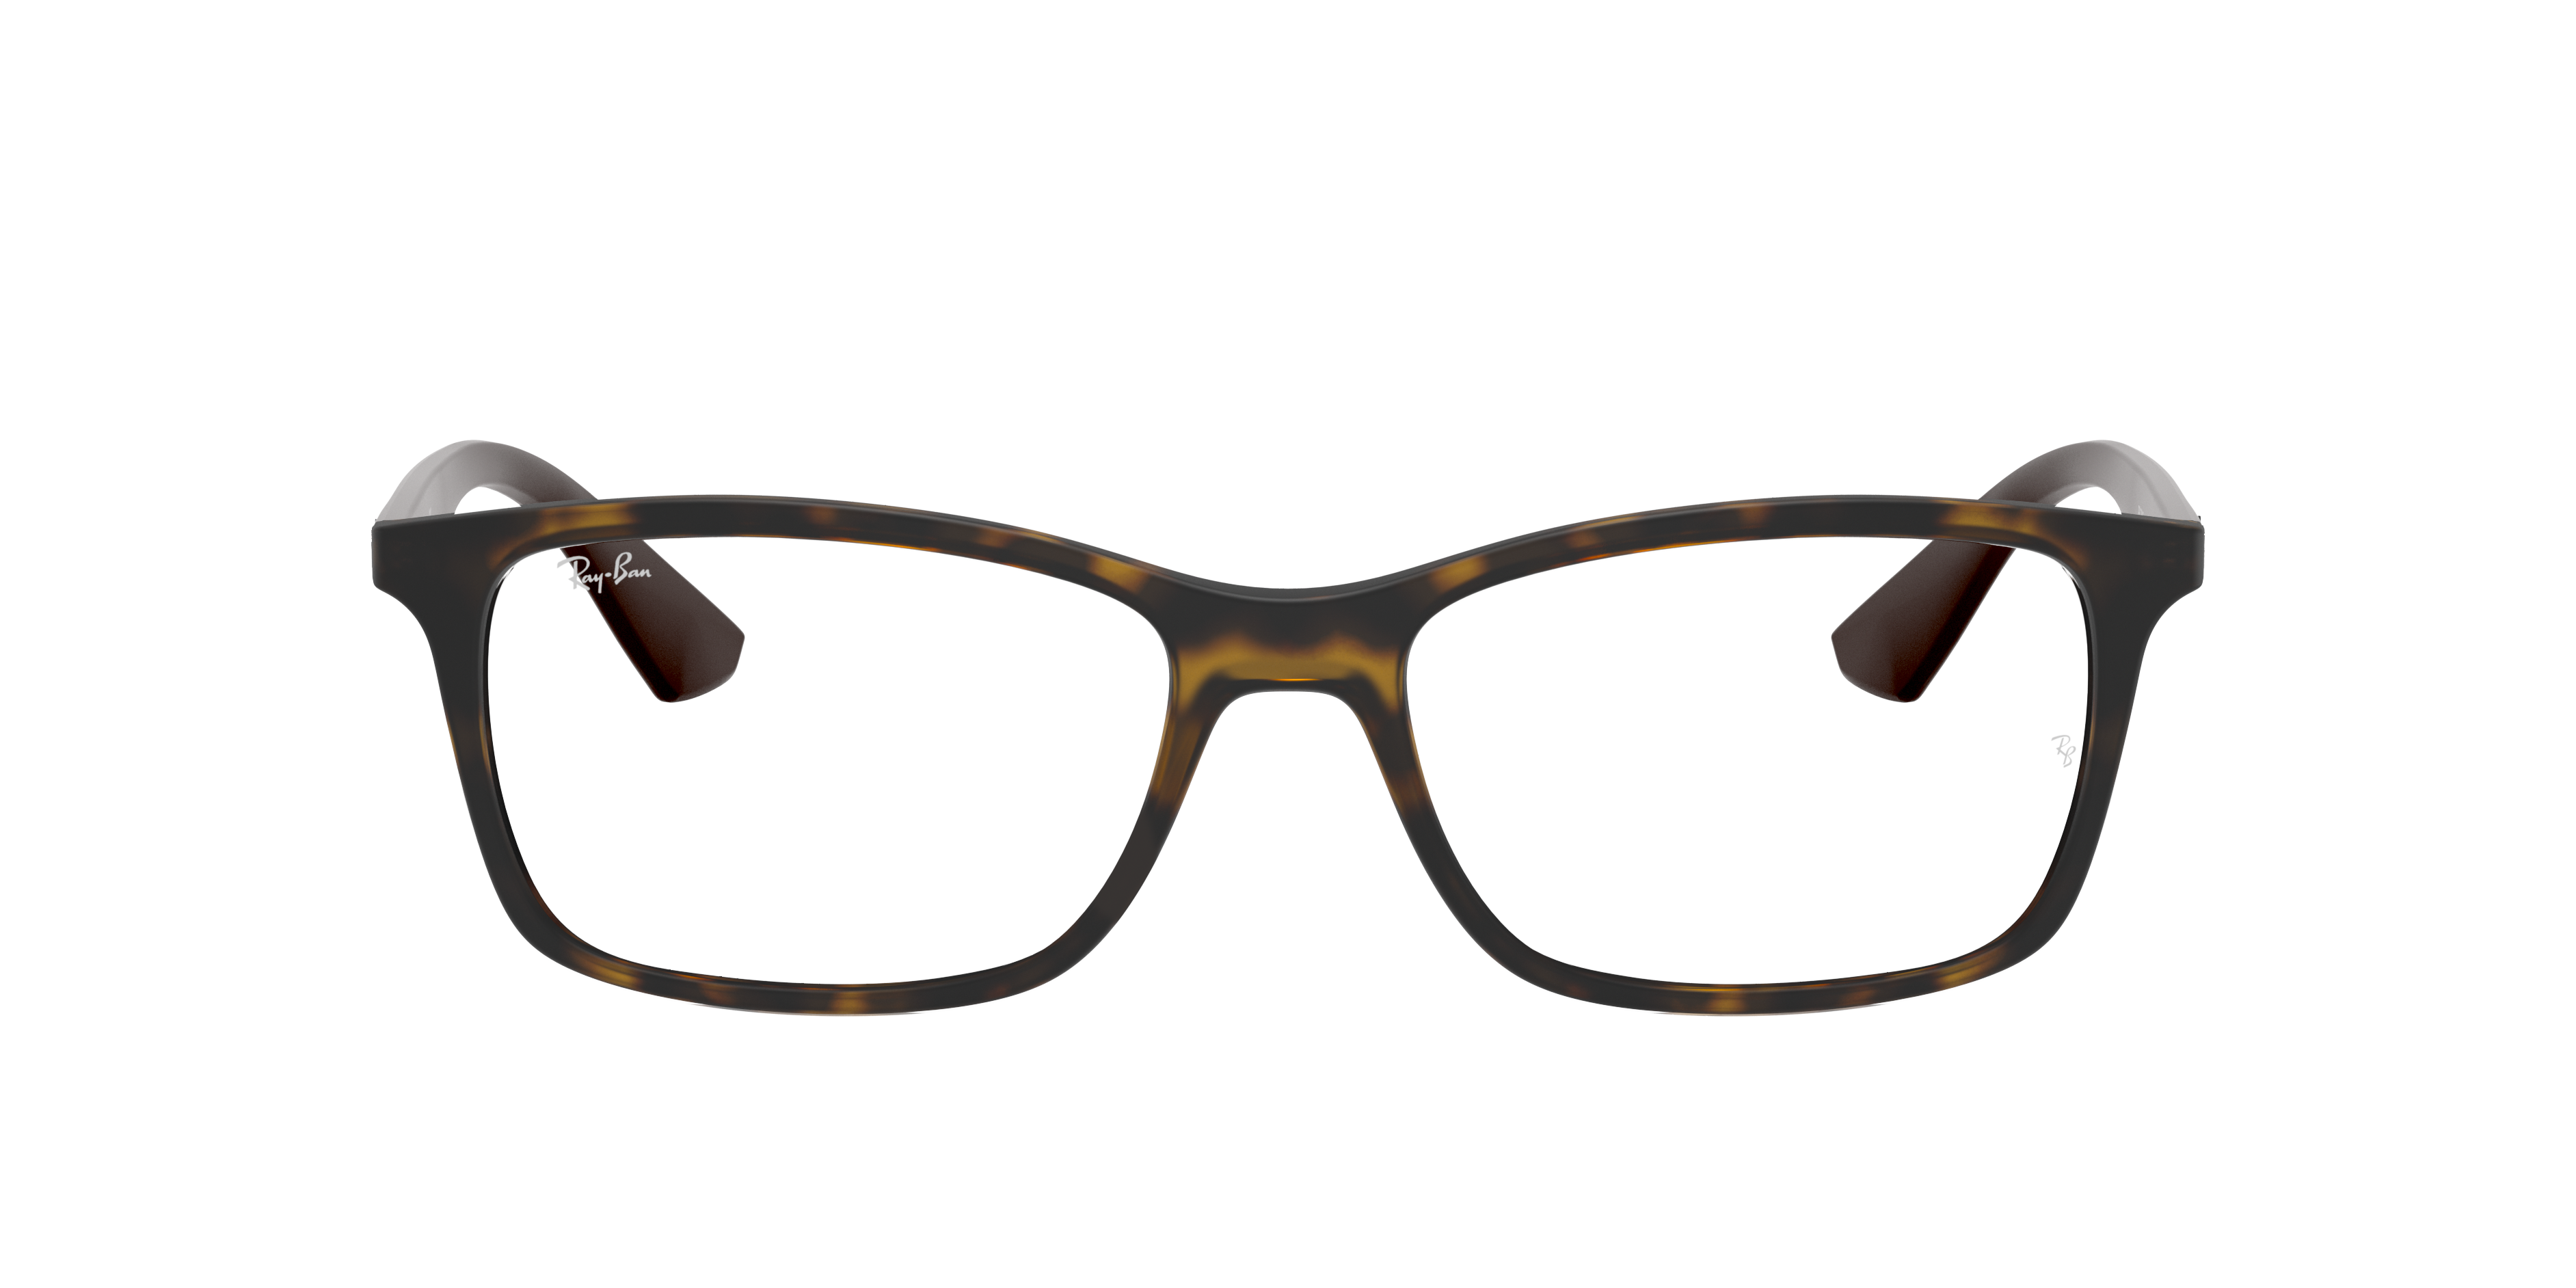 ray ban men's eyeglass frames